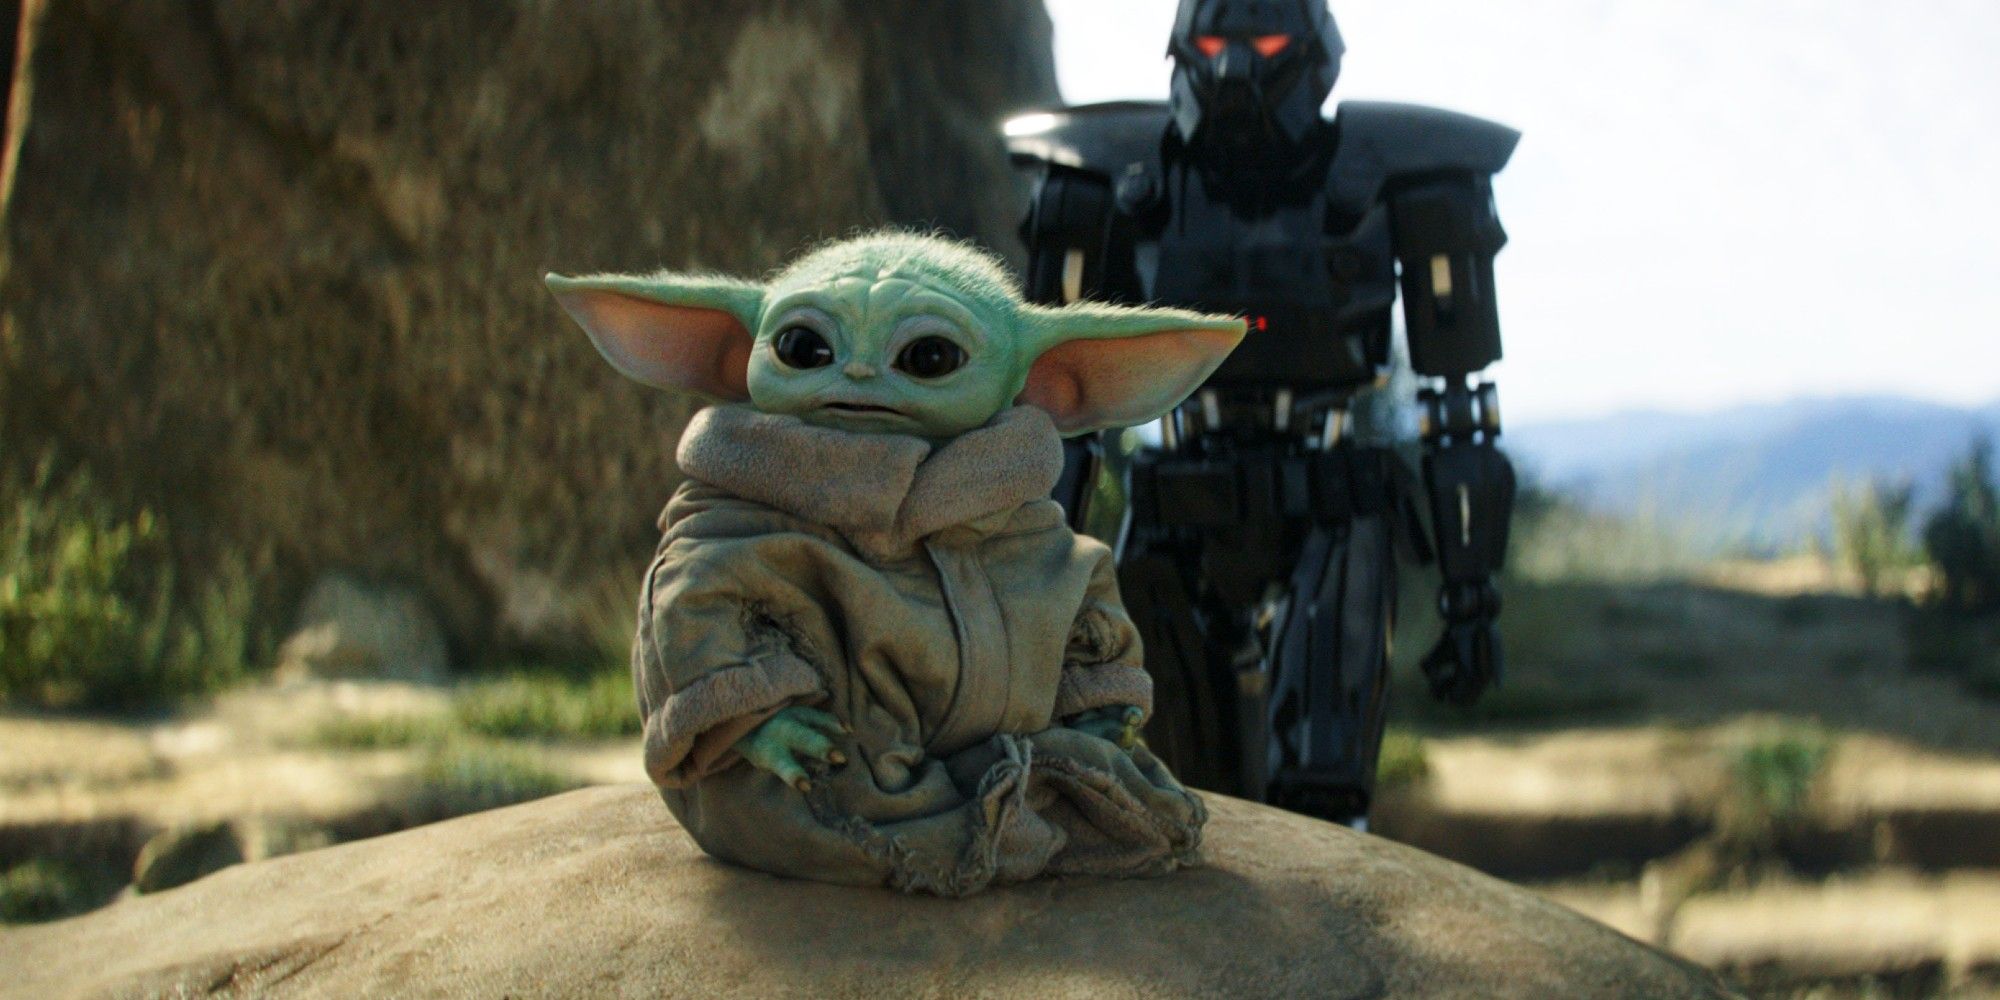 Grogu aka Baby Yoda in The Mandalorian Season 2